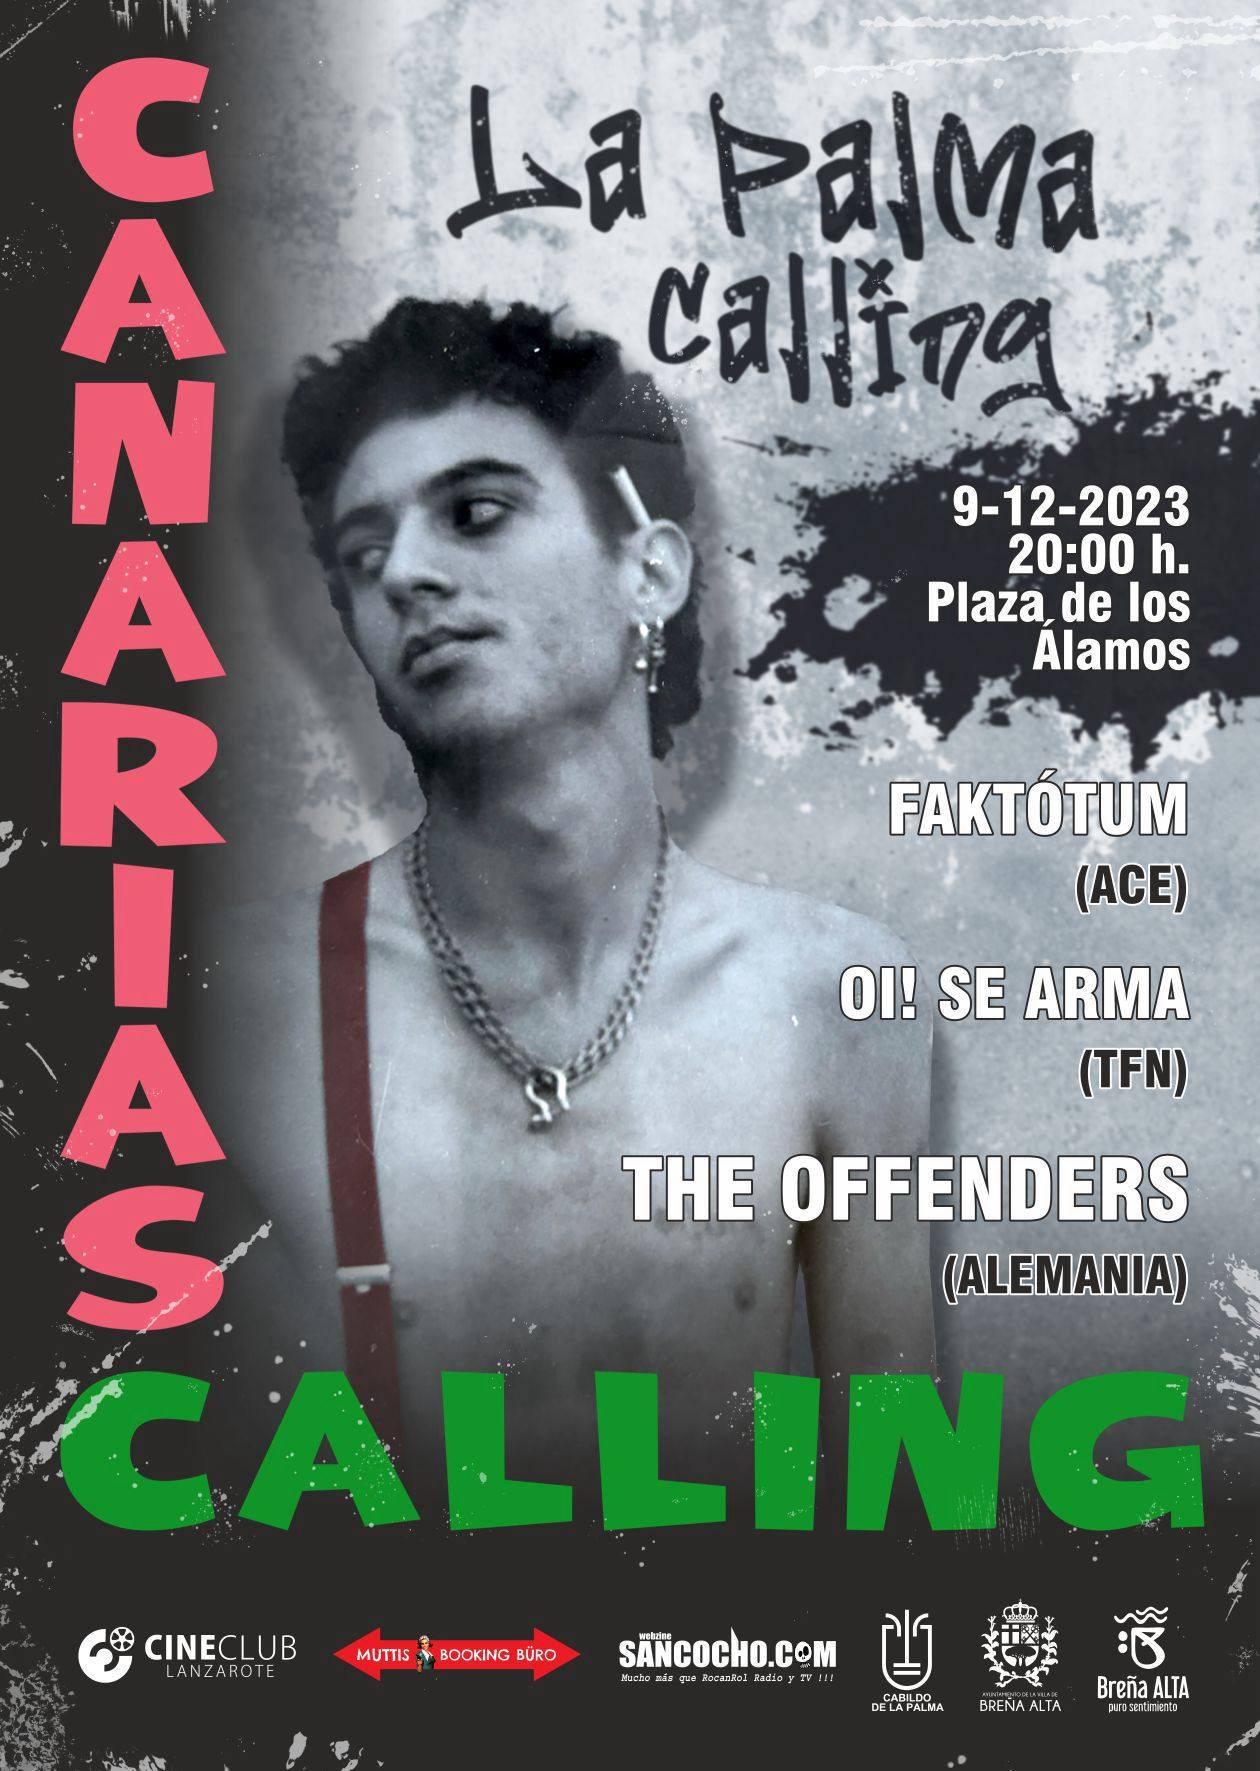 Canarias calling – La Palma